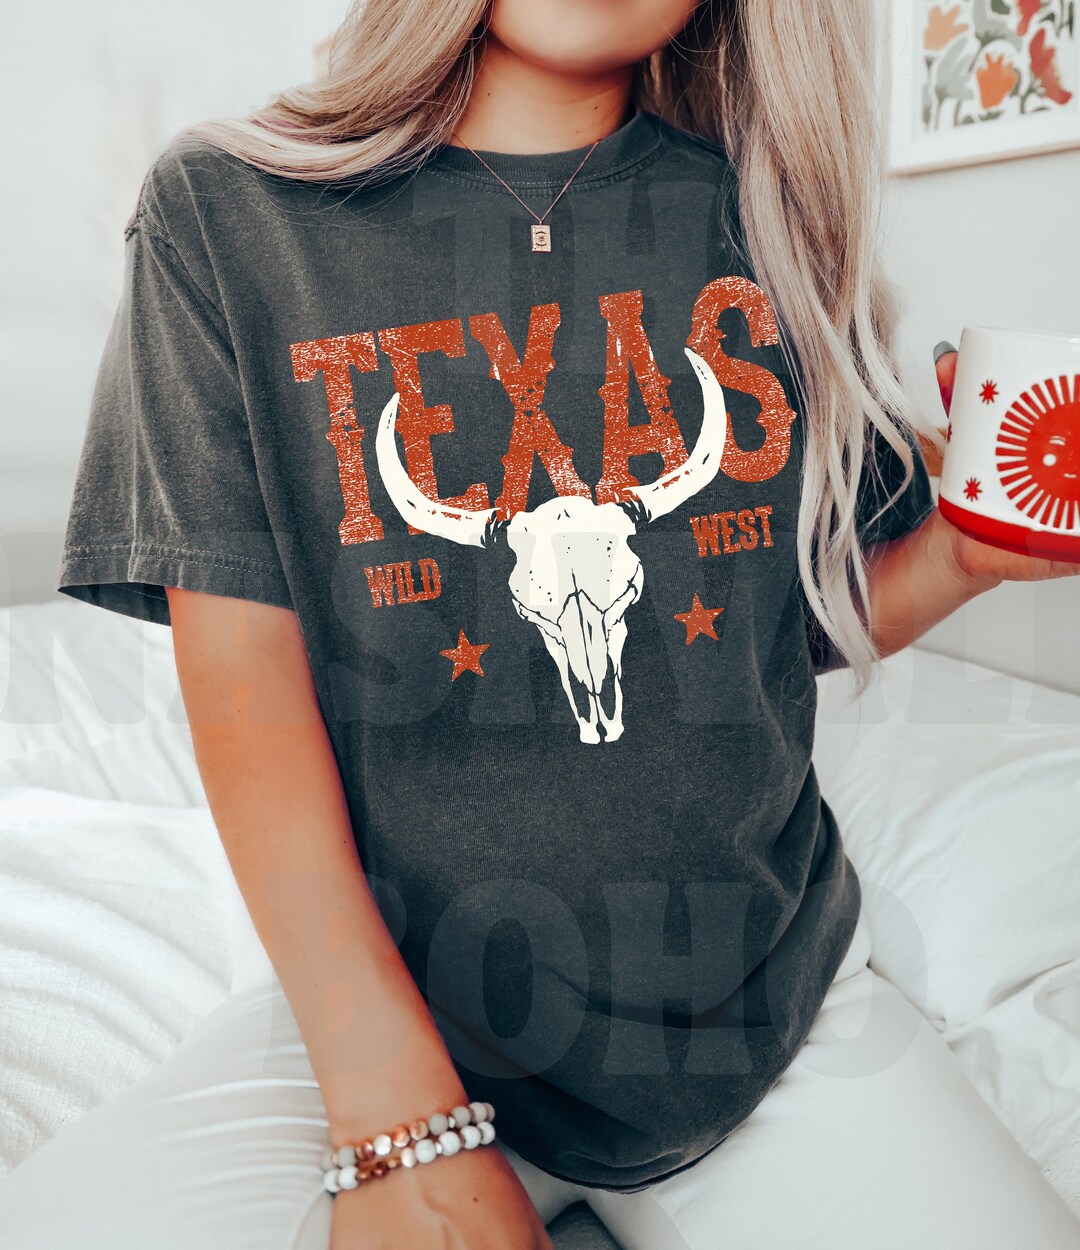 Texas Tee, Texas T-shirt, Texas Vintage Inspired Cotton T-shirt, Desert ...